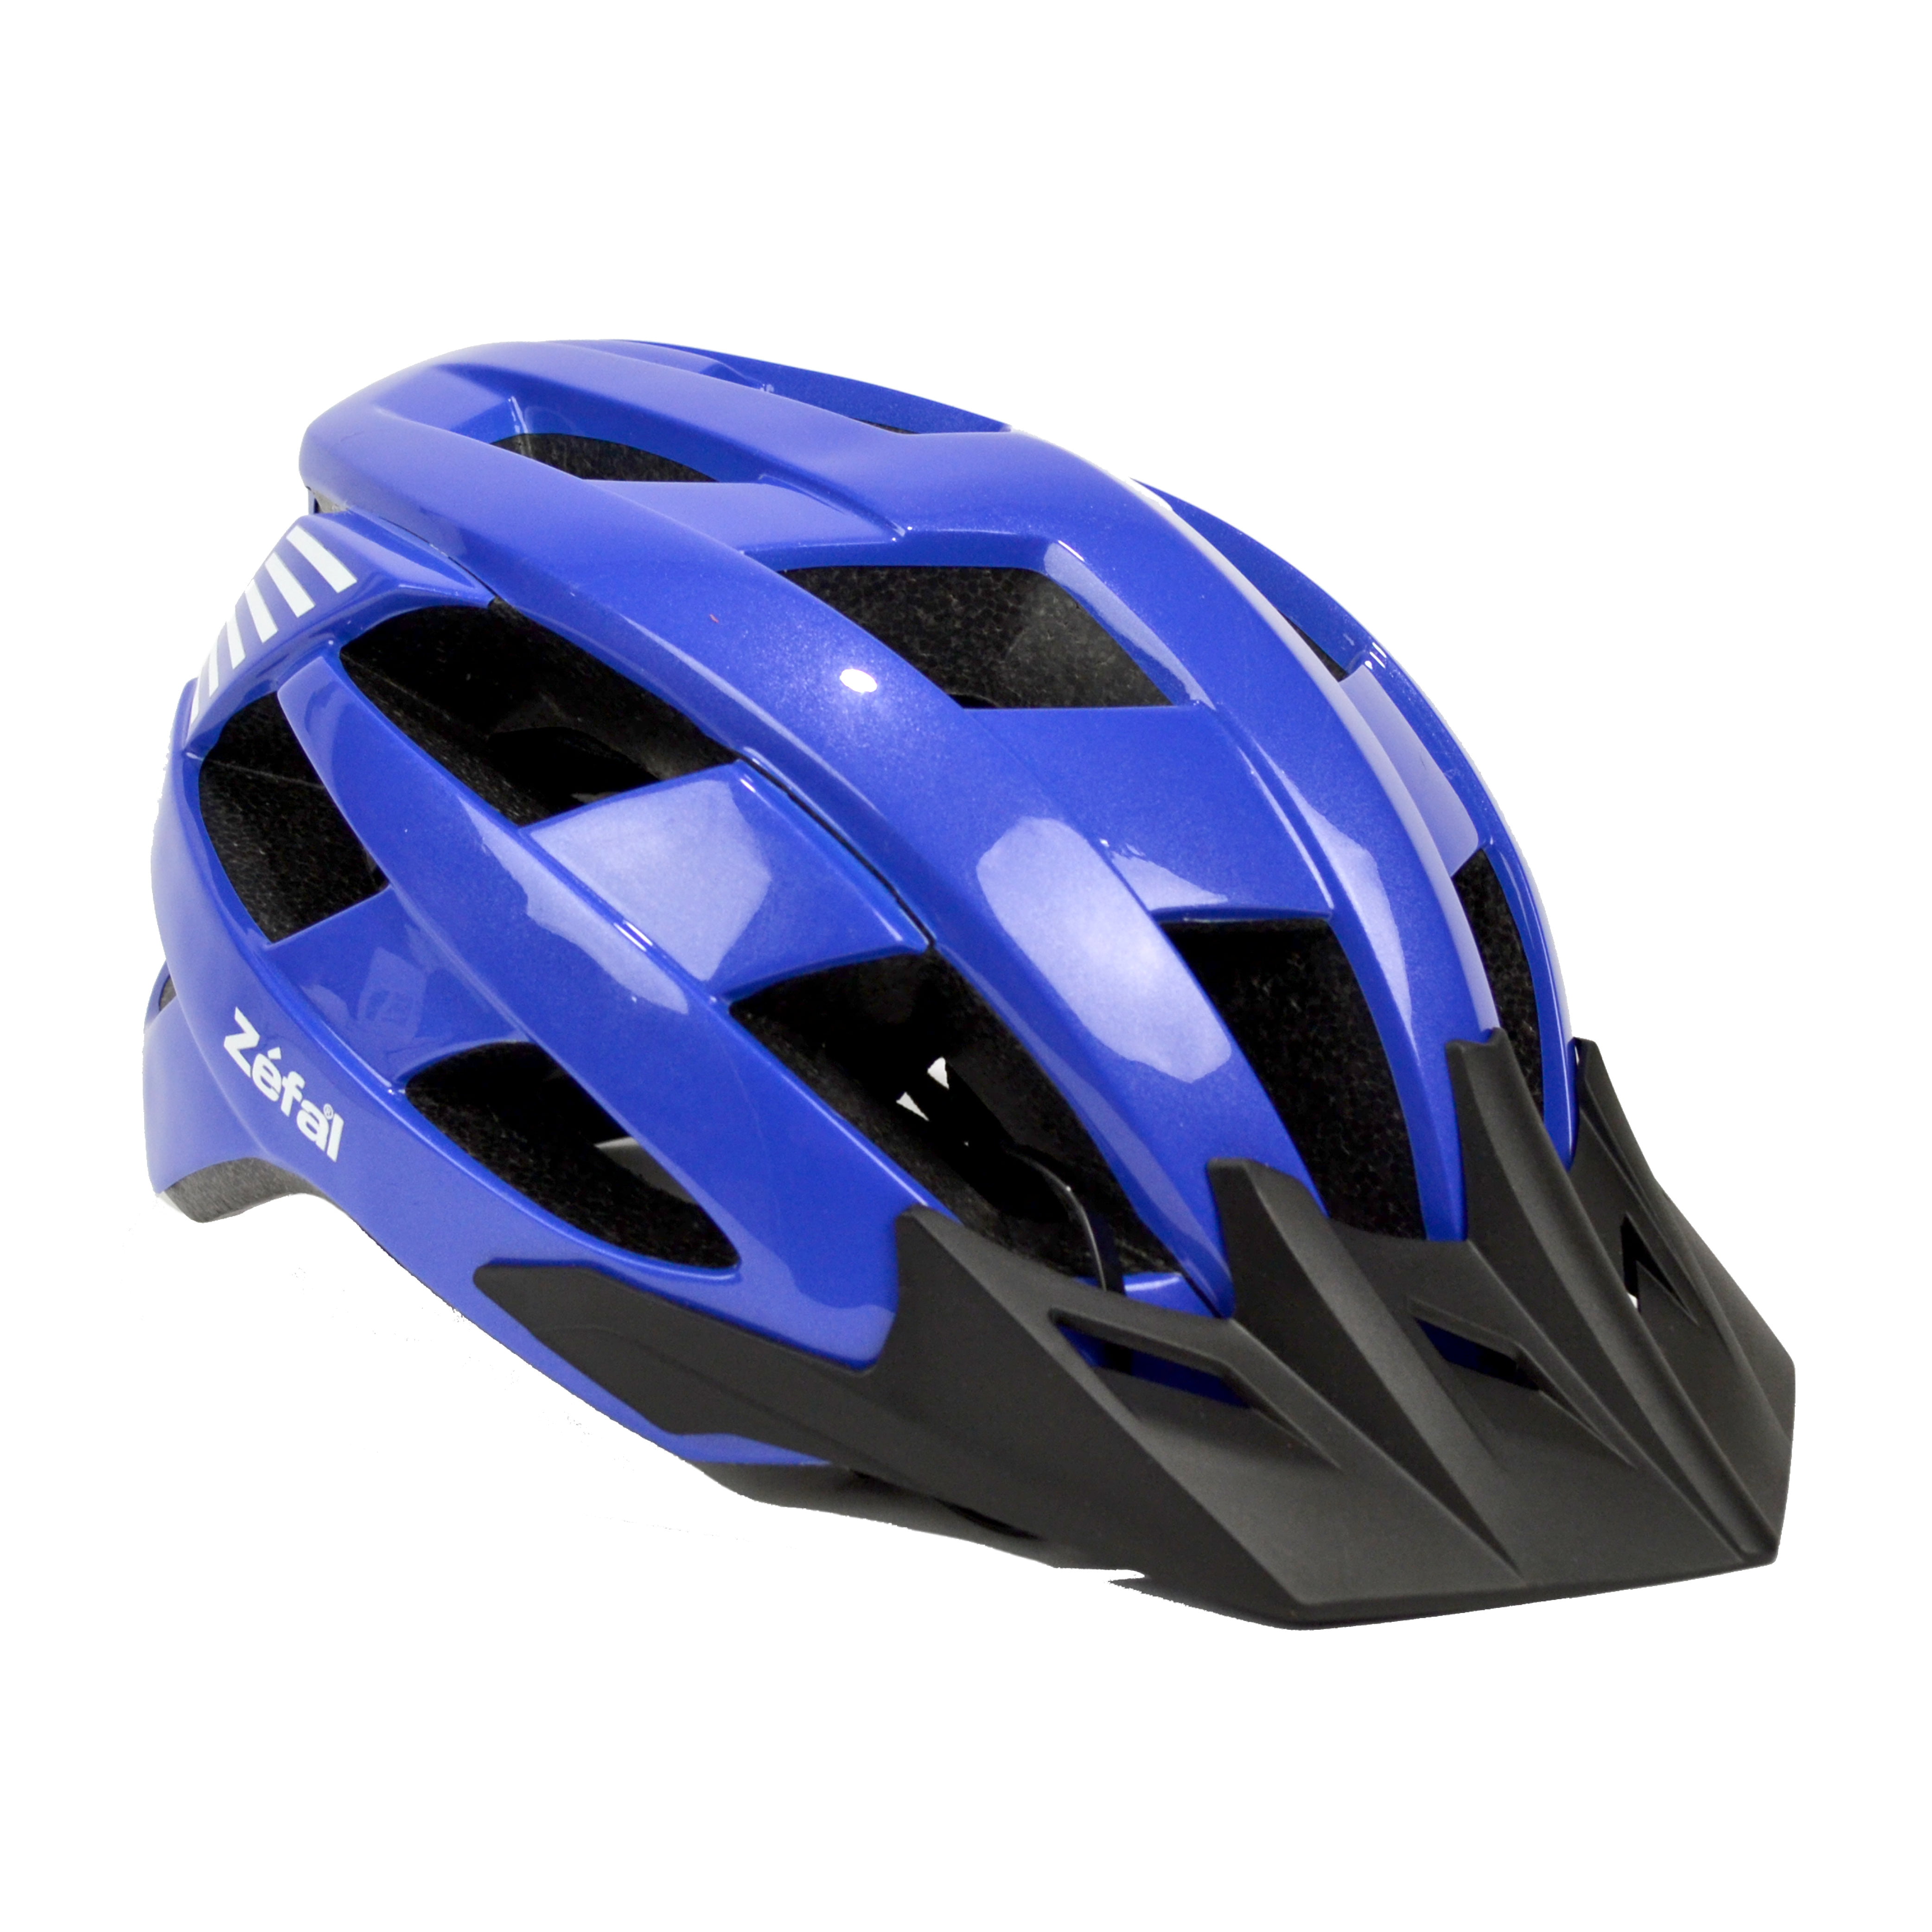 Blue Bike Road Helmet Adjustable Cycling Bicycle Sport Protect Unisex 